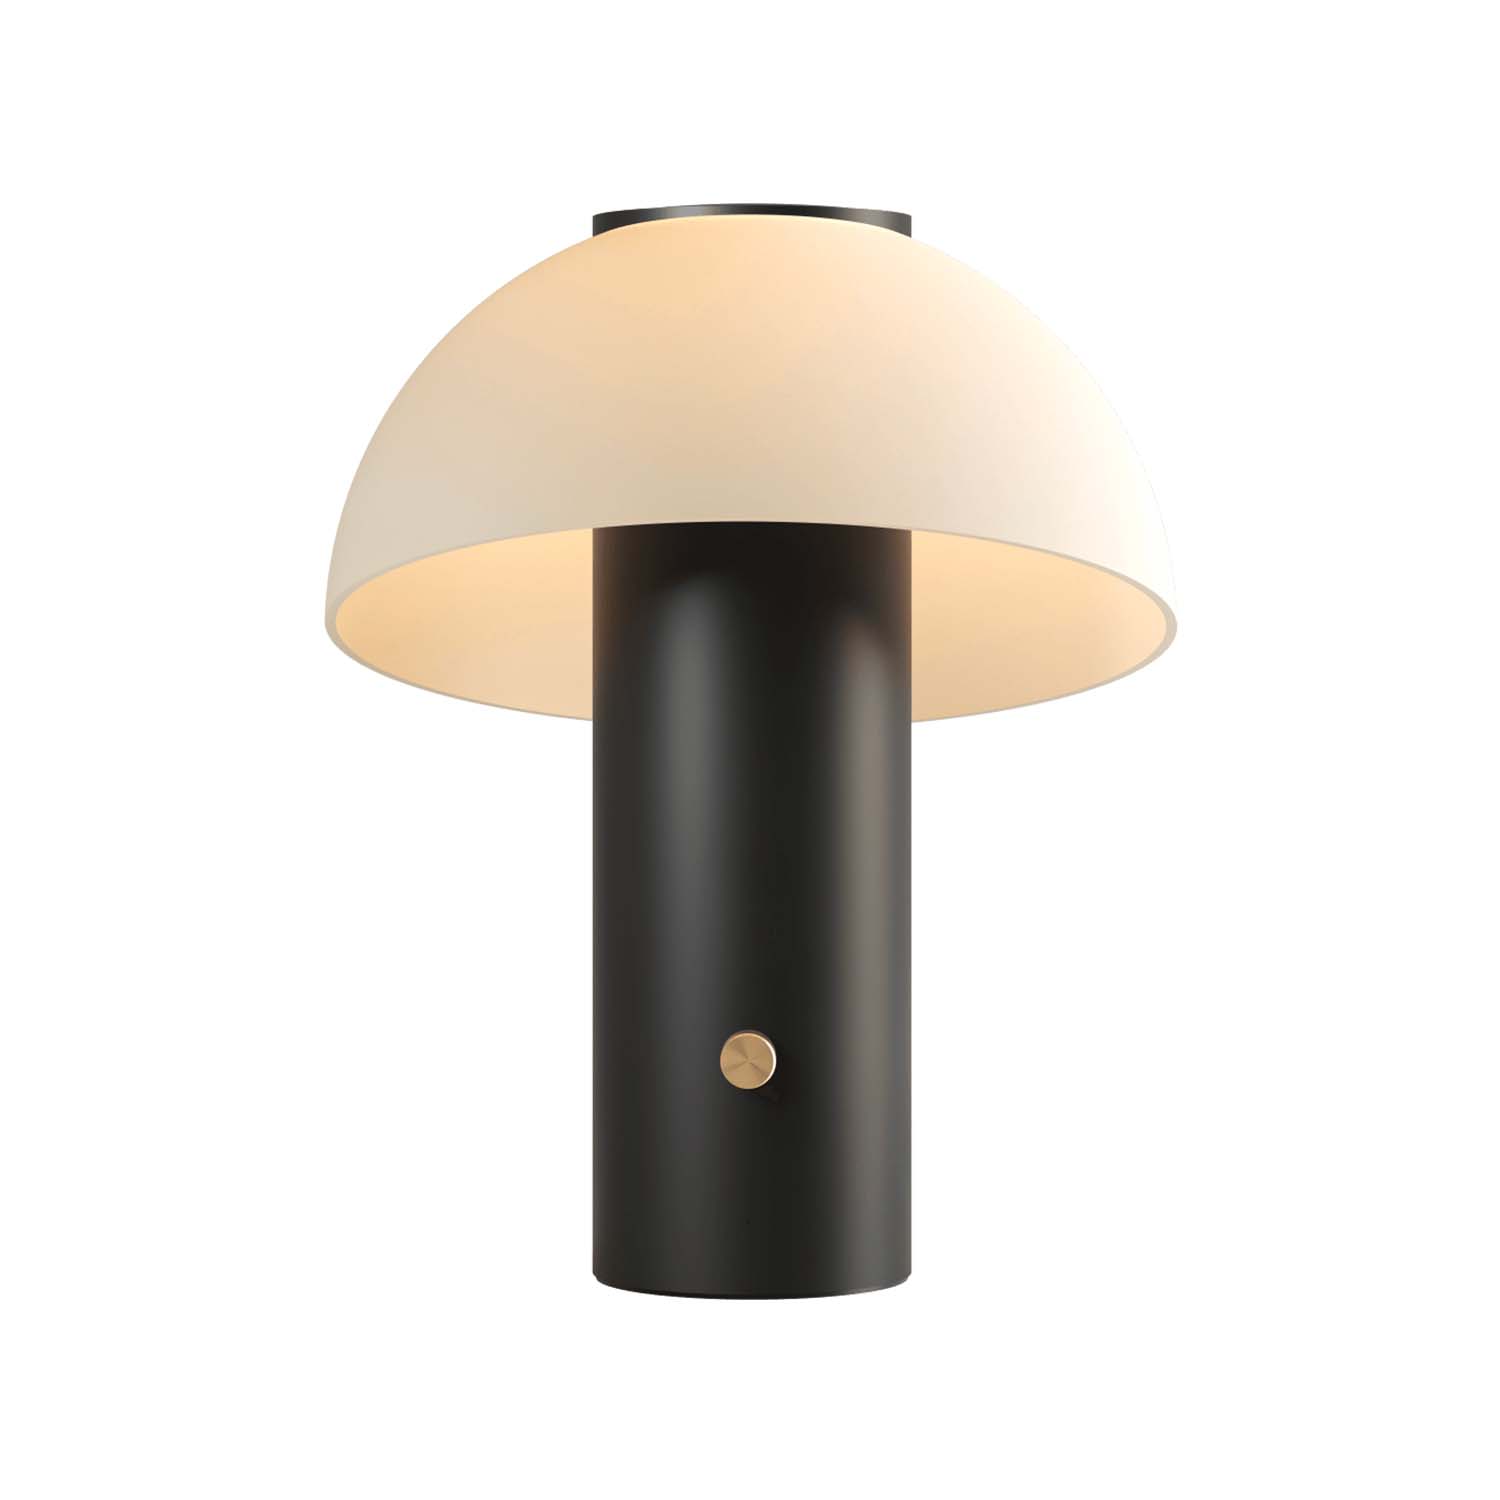 PICCOLO - Lampe connectée design dimmable